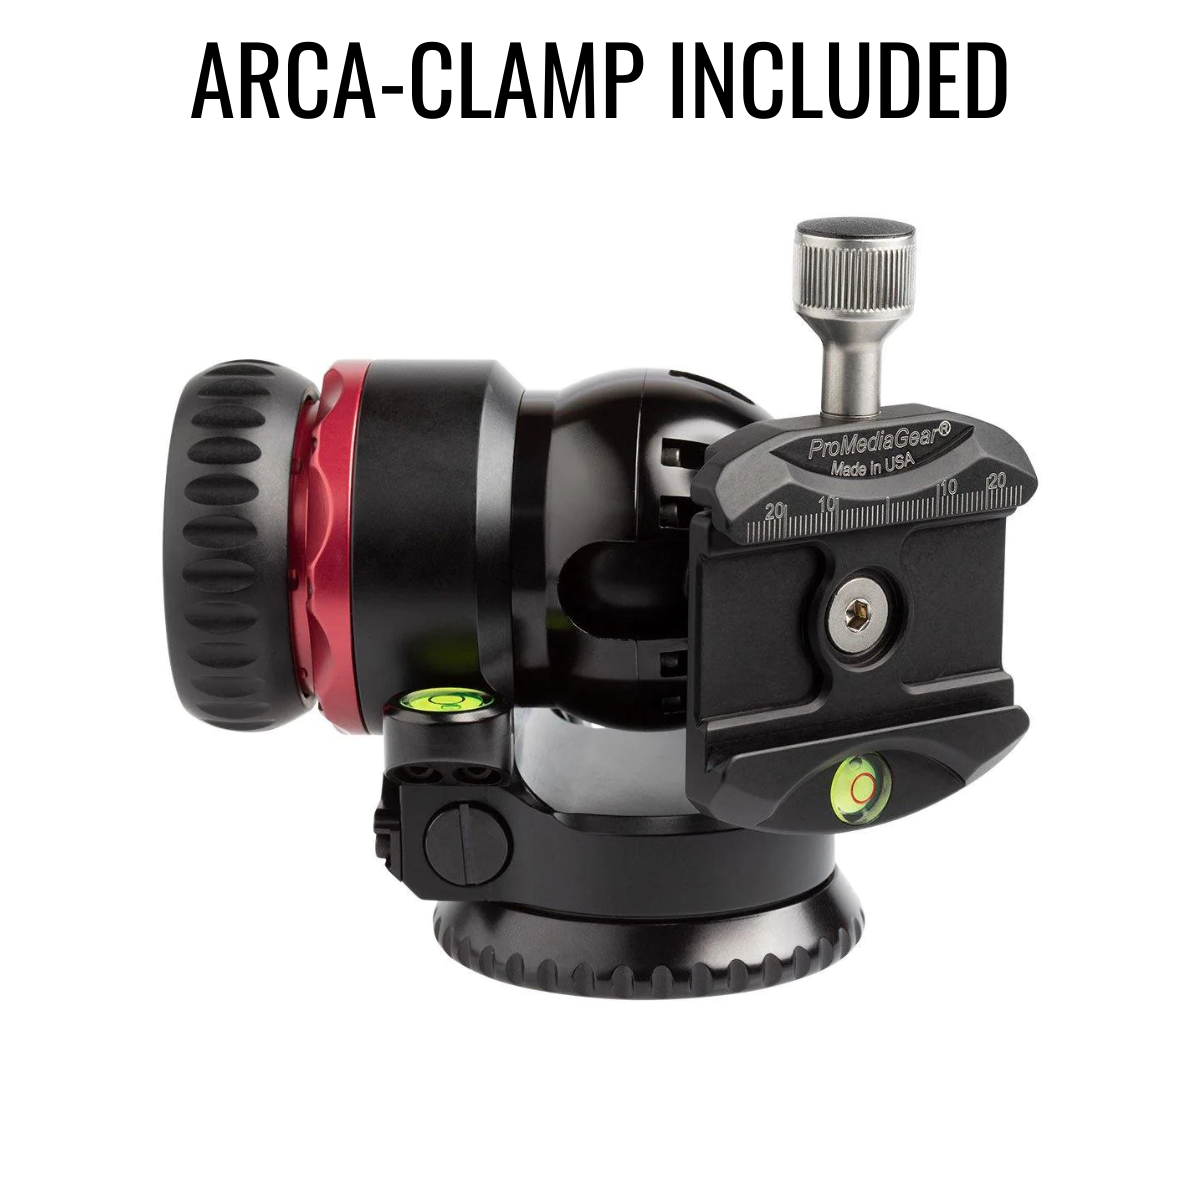 arca-clamp included